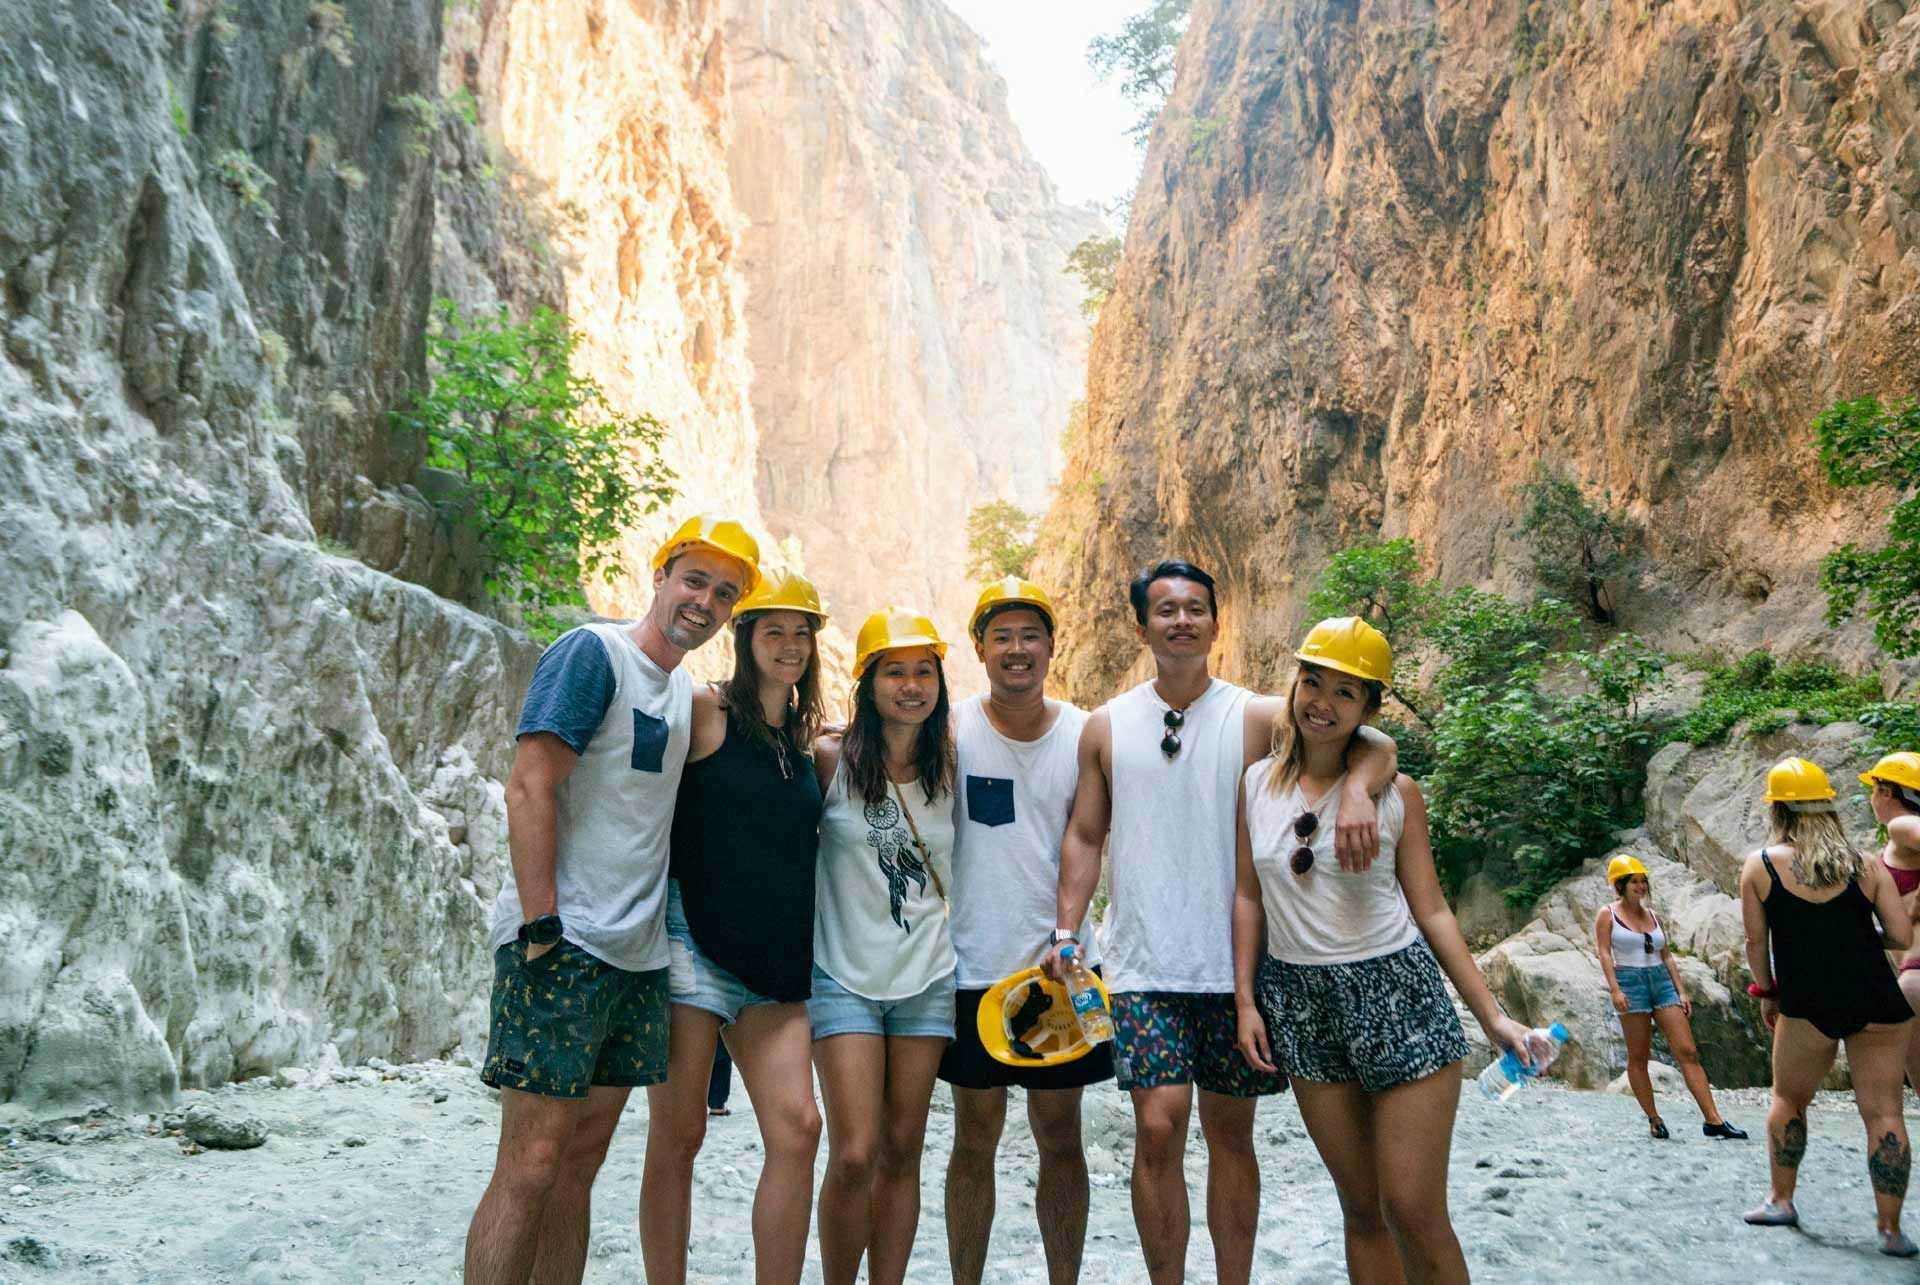 Group of friends in Saklikent Gorge in Turkey